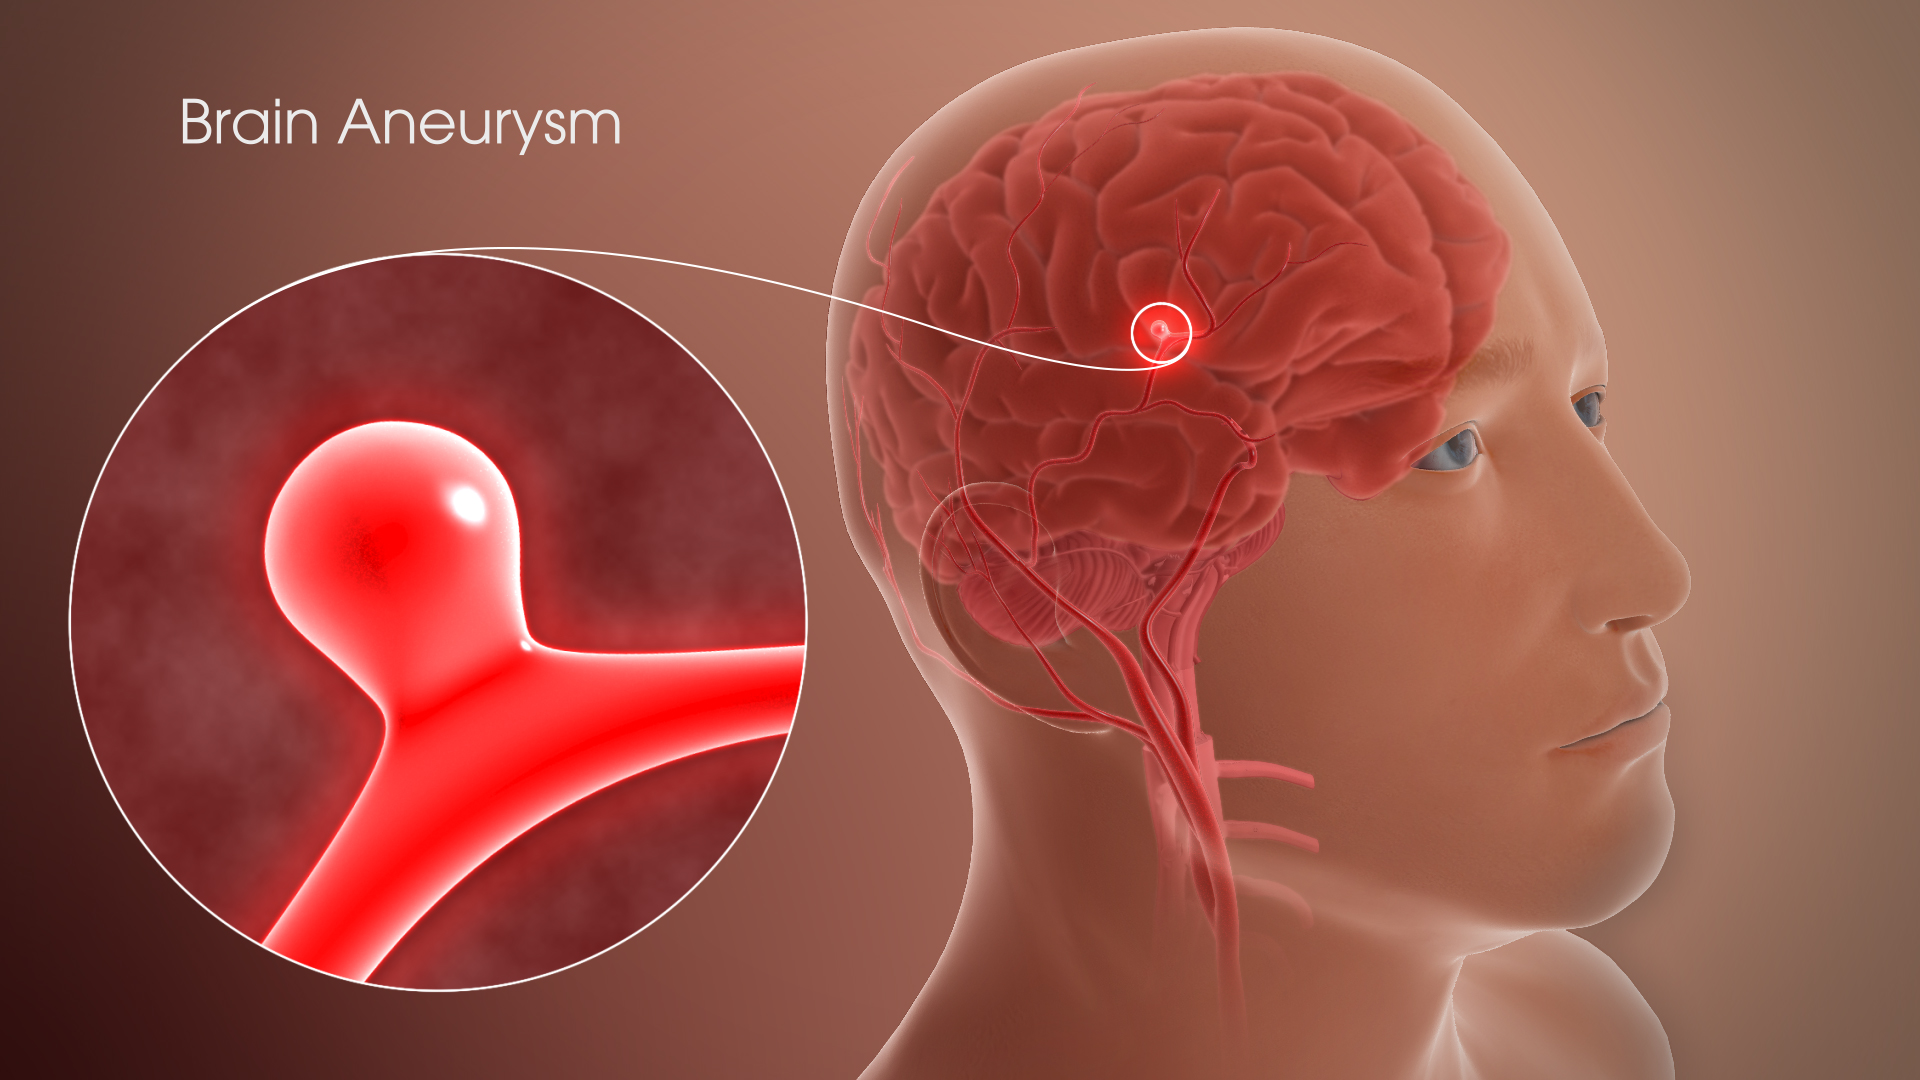 3D Medical Animation Still Shot Showing Brain Aneurysm